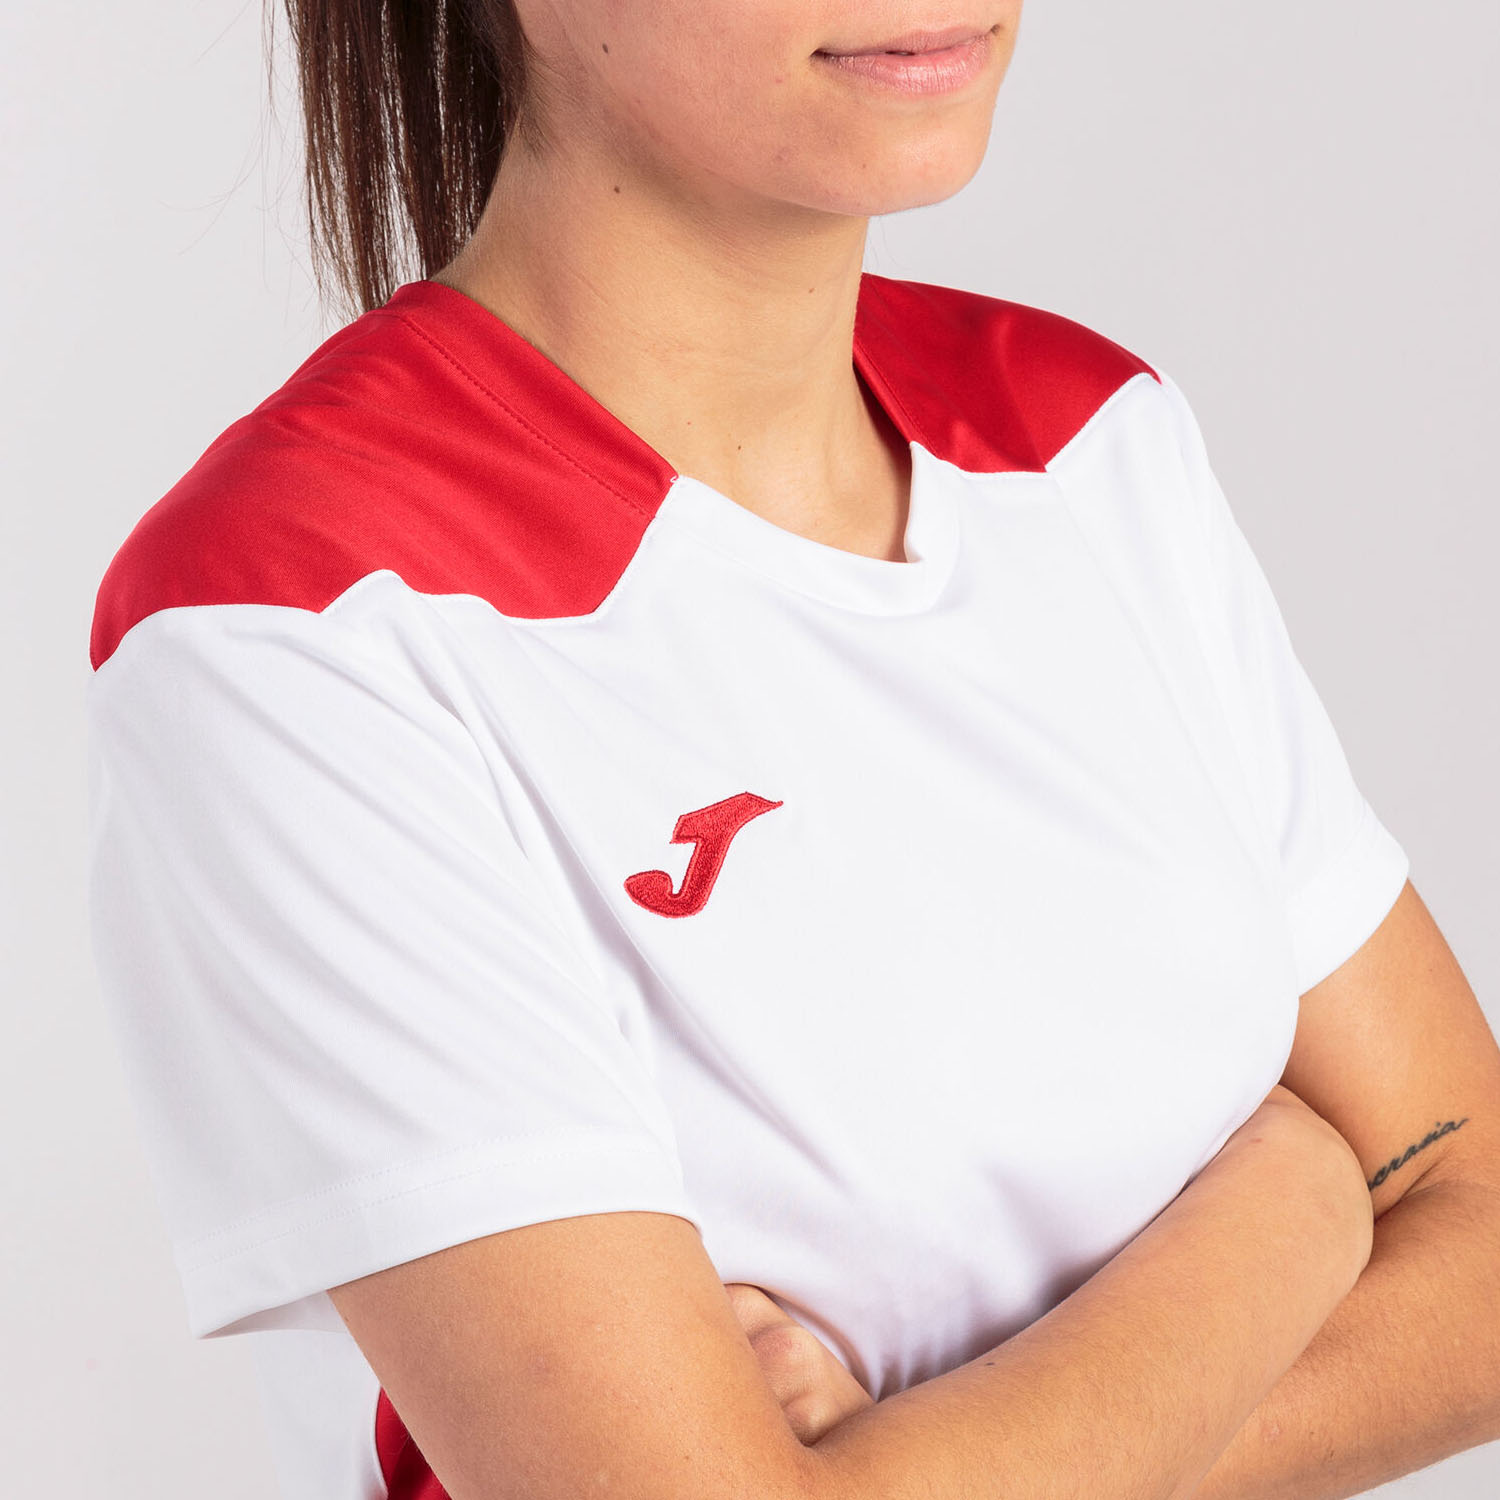 Joma Championship VI Logo Camiseta - White/Red